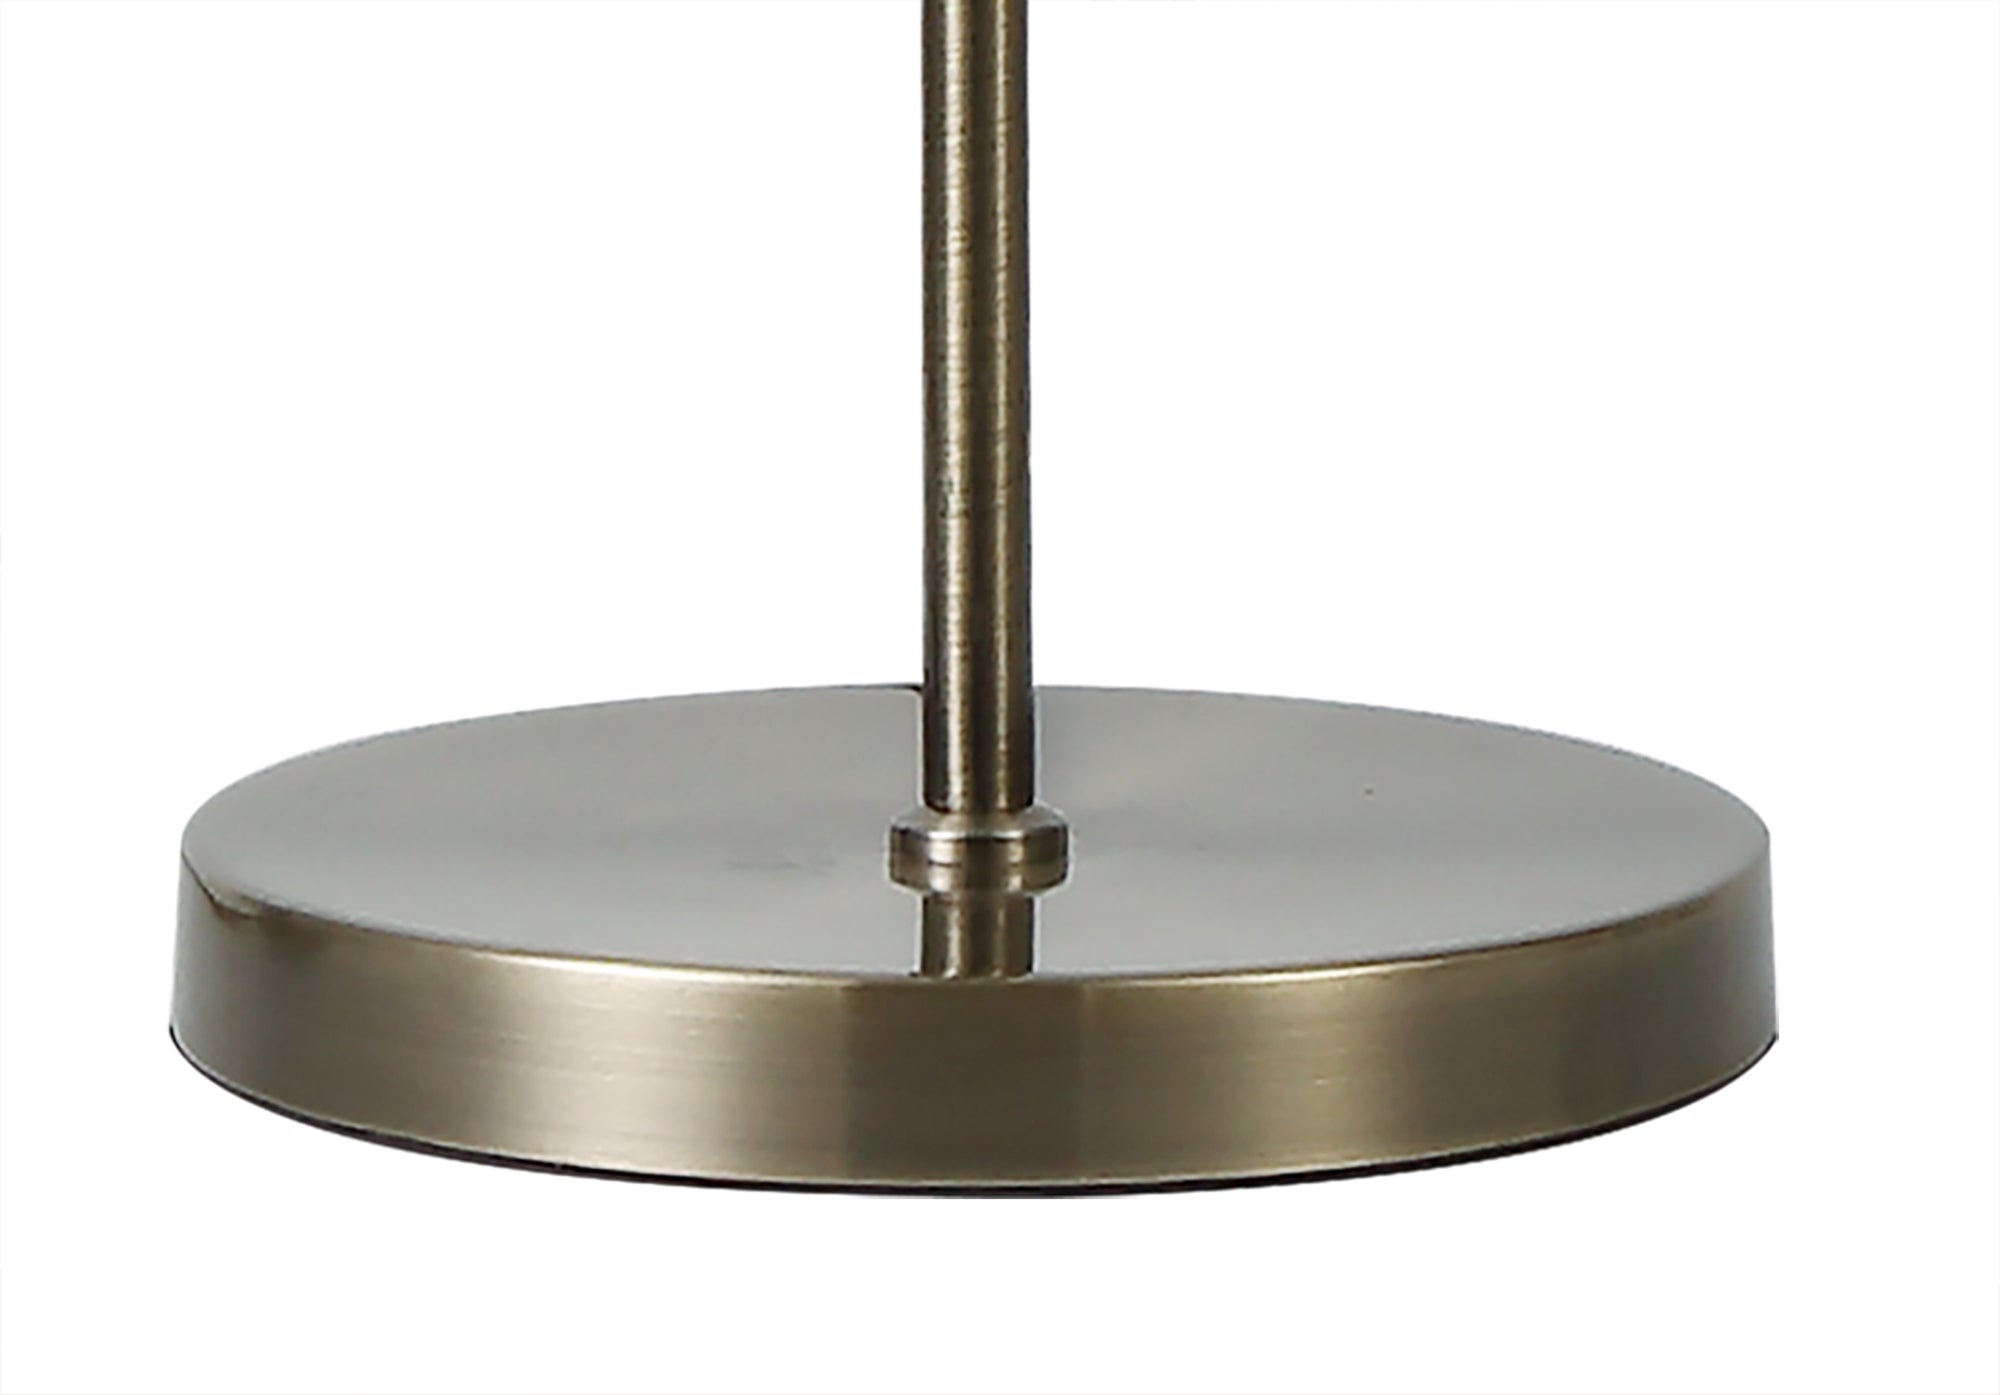 Lightologist Farra Floor Lamp, 3 x G9, Antique Brass/Smoked & Amber Glass LO182193